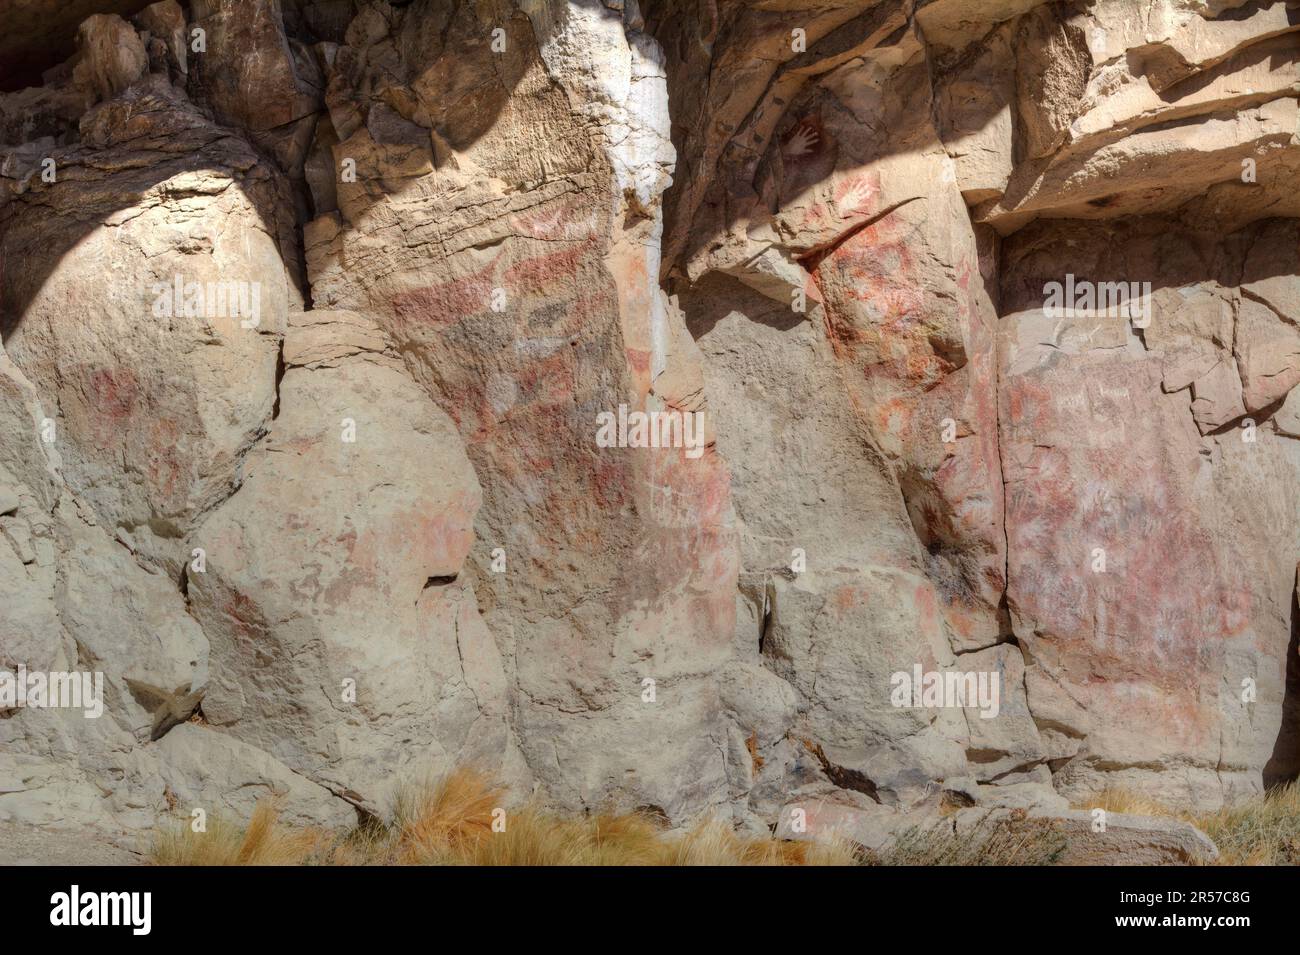 Prehistoric art - handprints in Cueva de las Manos cave and complex of rock art sites in Santa Cruz province, Argentina Stock Photo